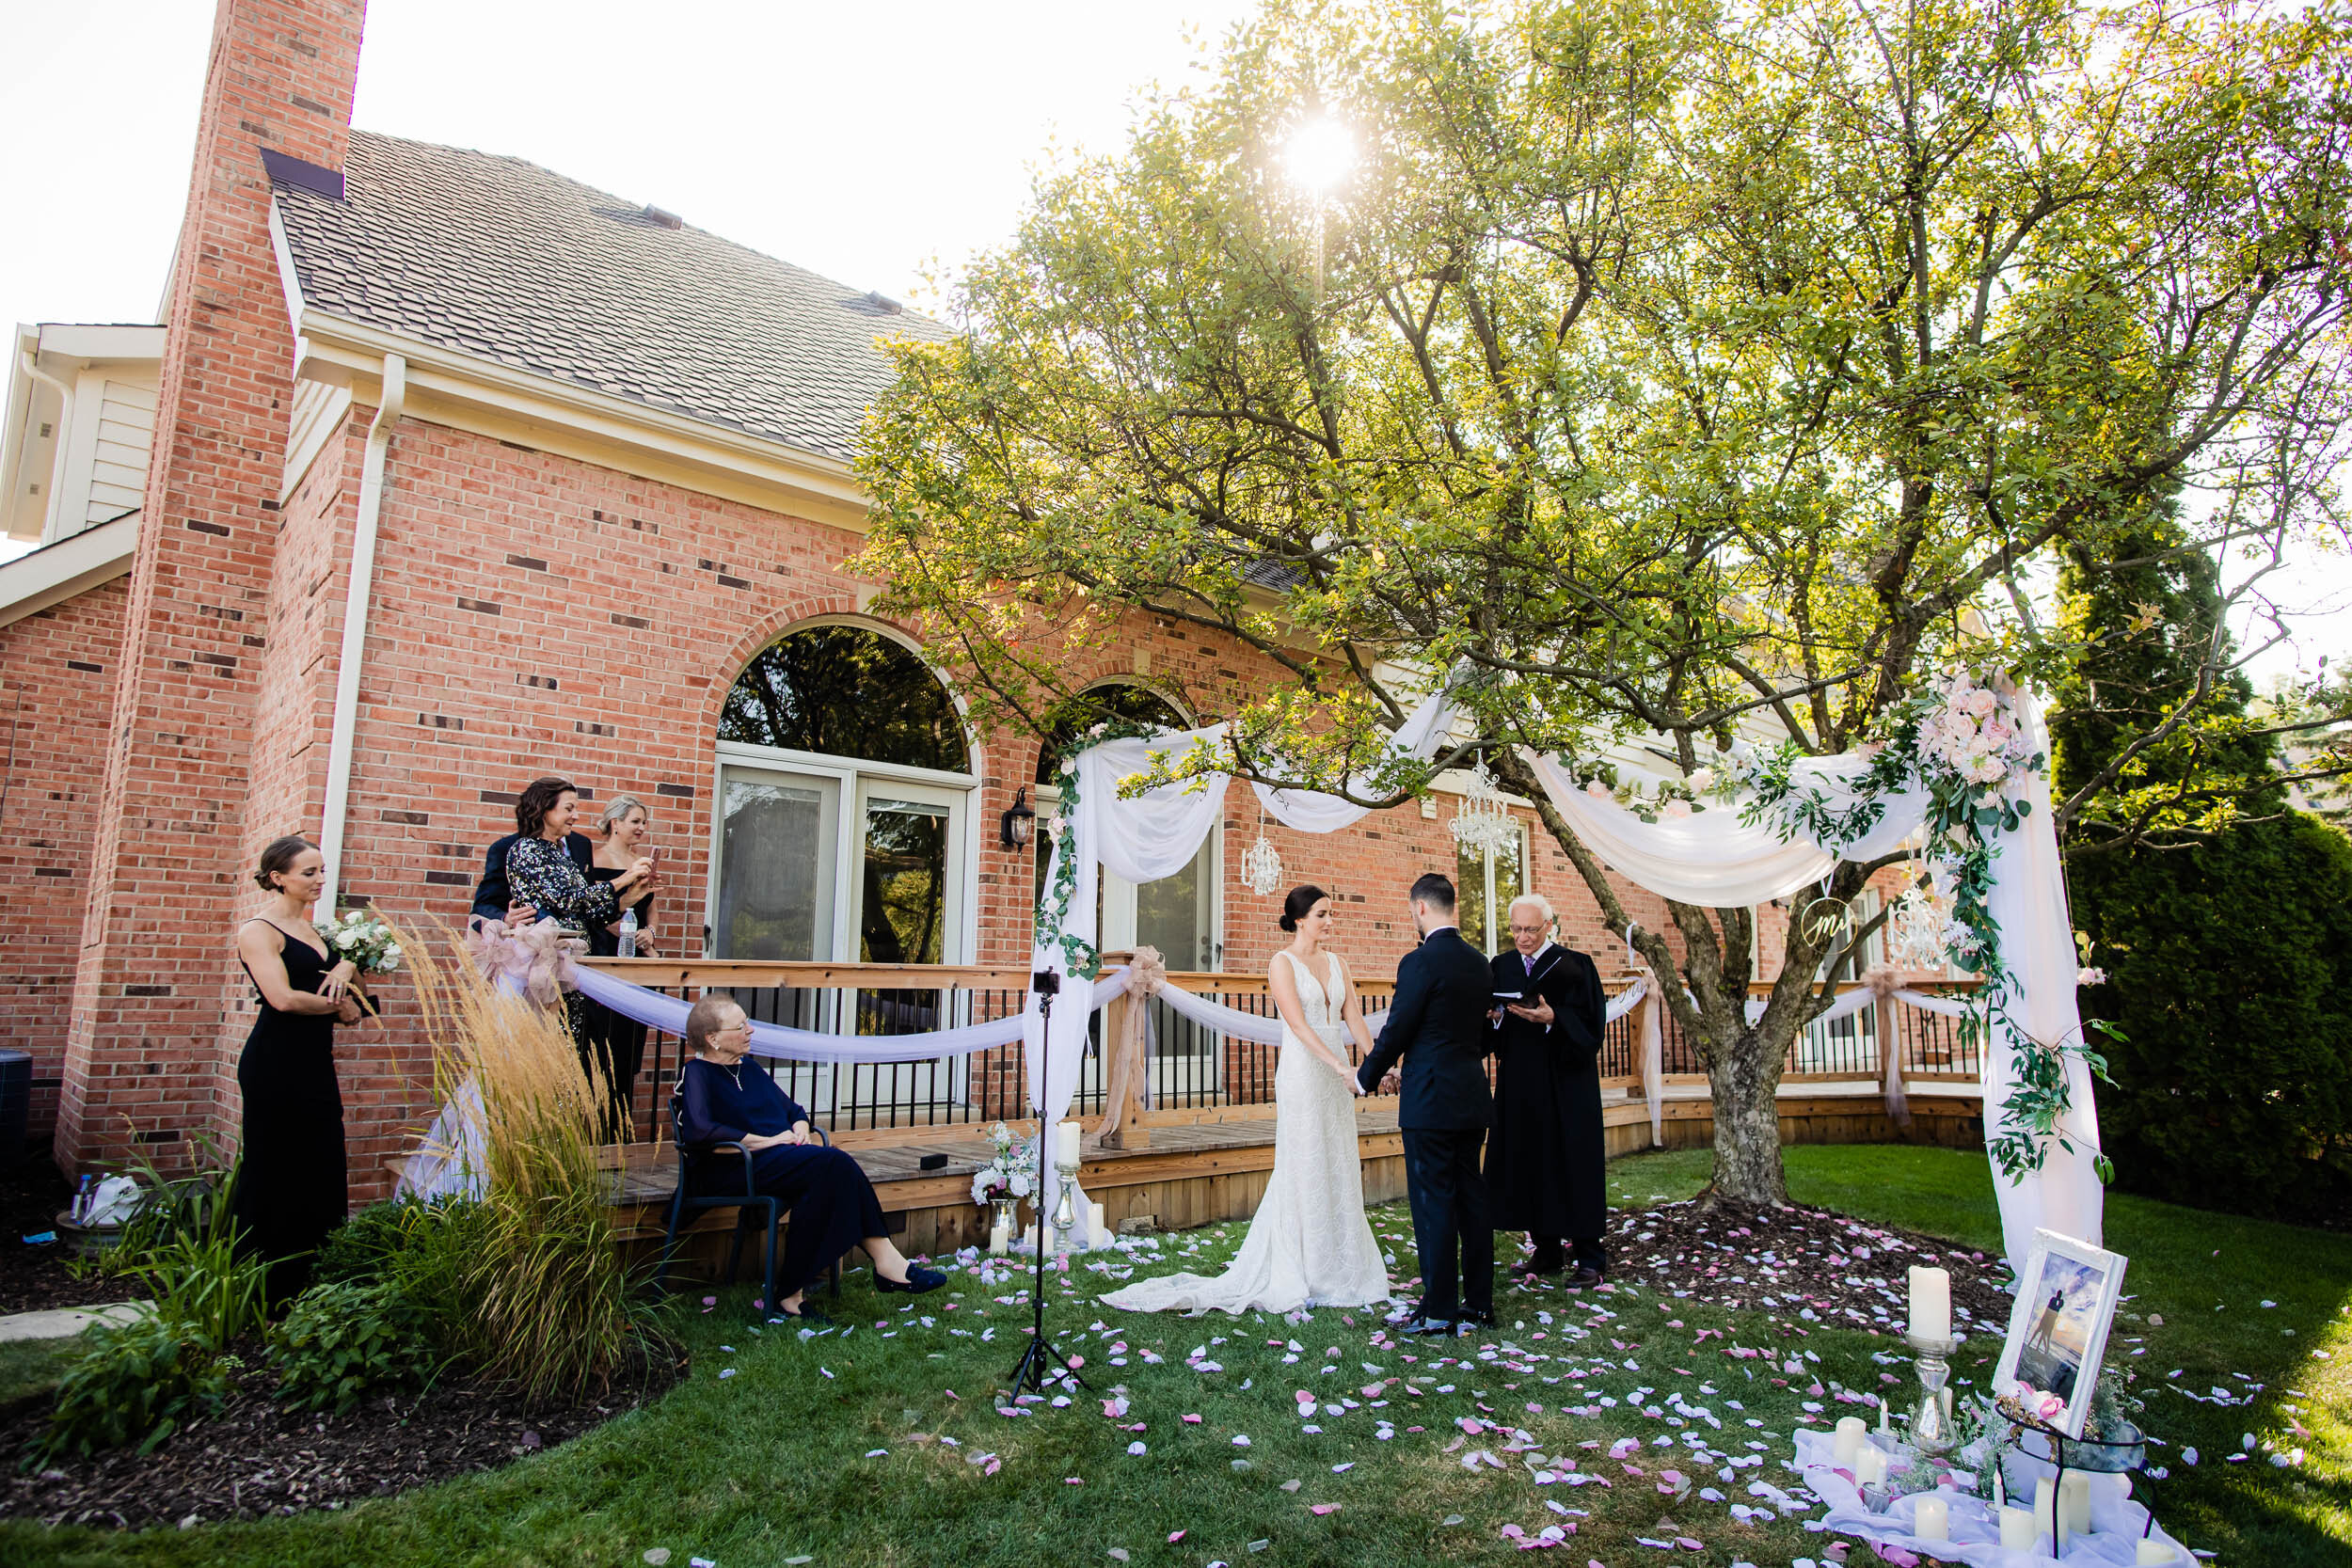 Backyard wedding ceremony in Burr Ridge, Illinois:  Chicago wedding photography by J. Brown Photography.